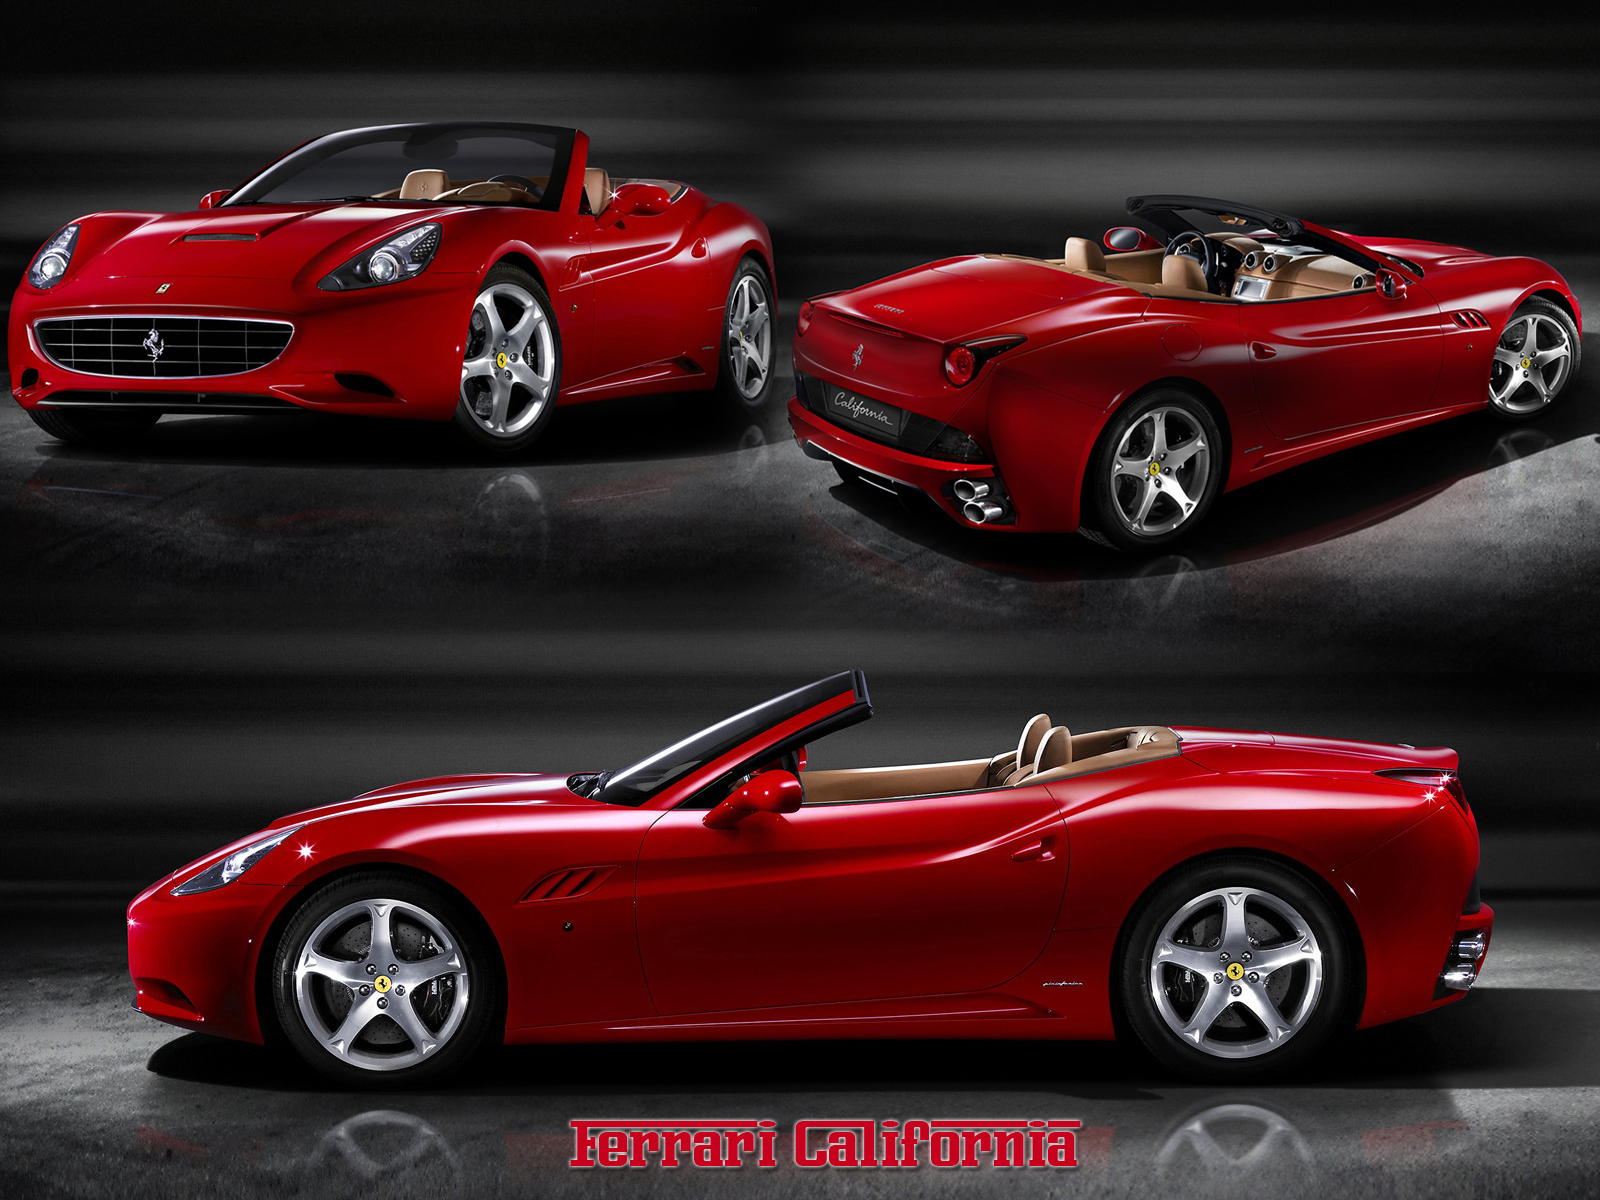 New-Ferrari-california-Wallpaper.jpg